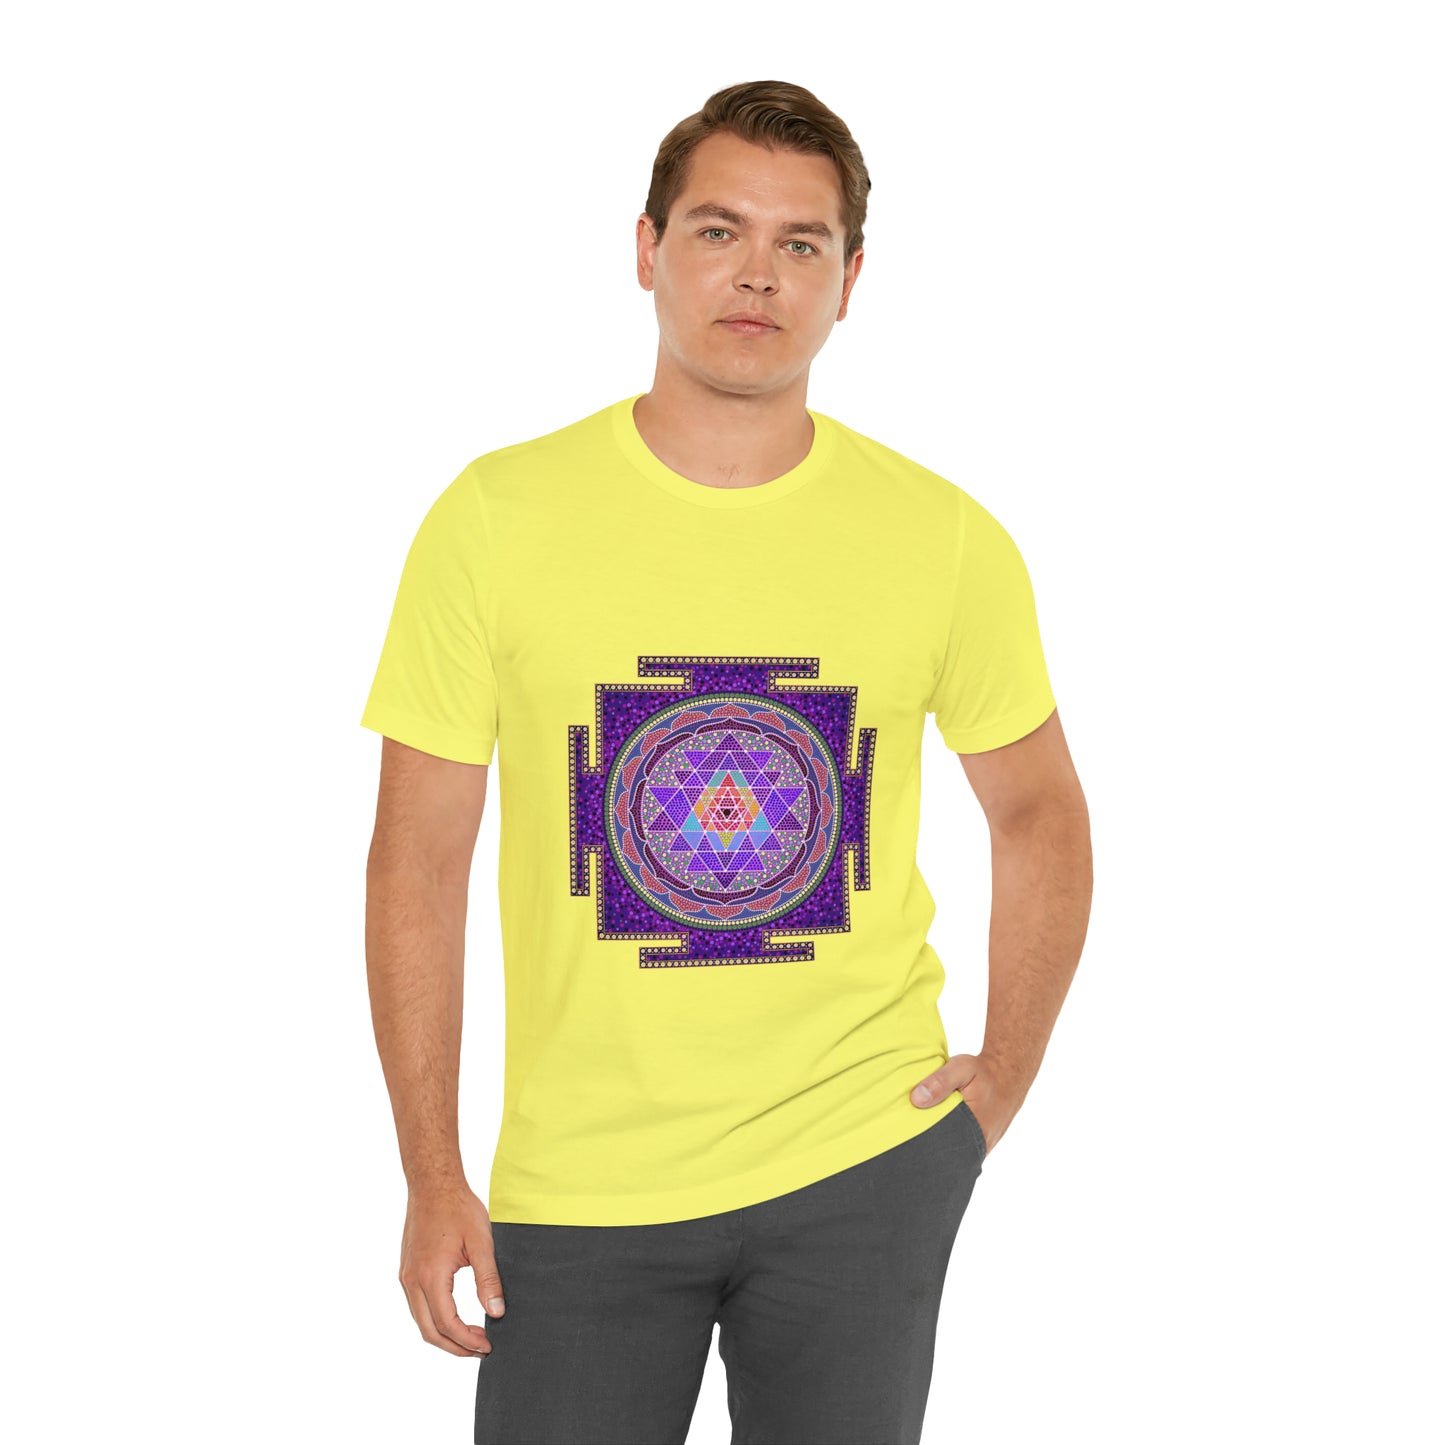 Sri Yantra T-shirt -Unisex (Protection & Prosperity)